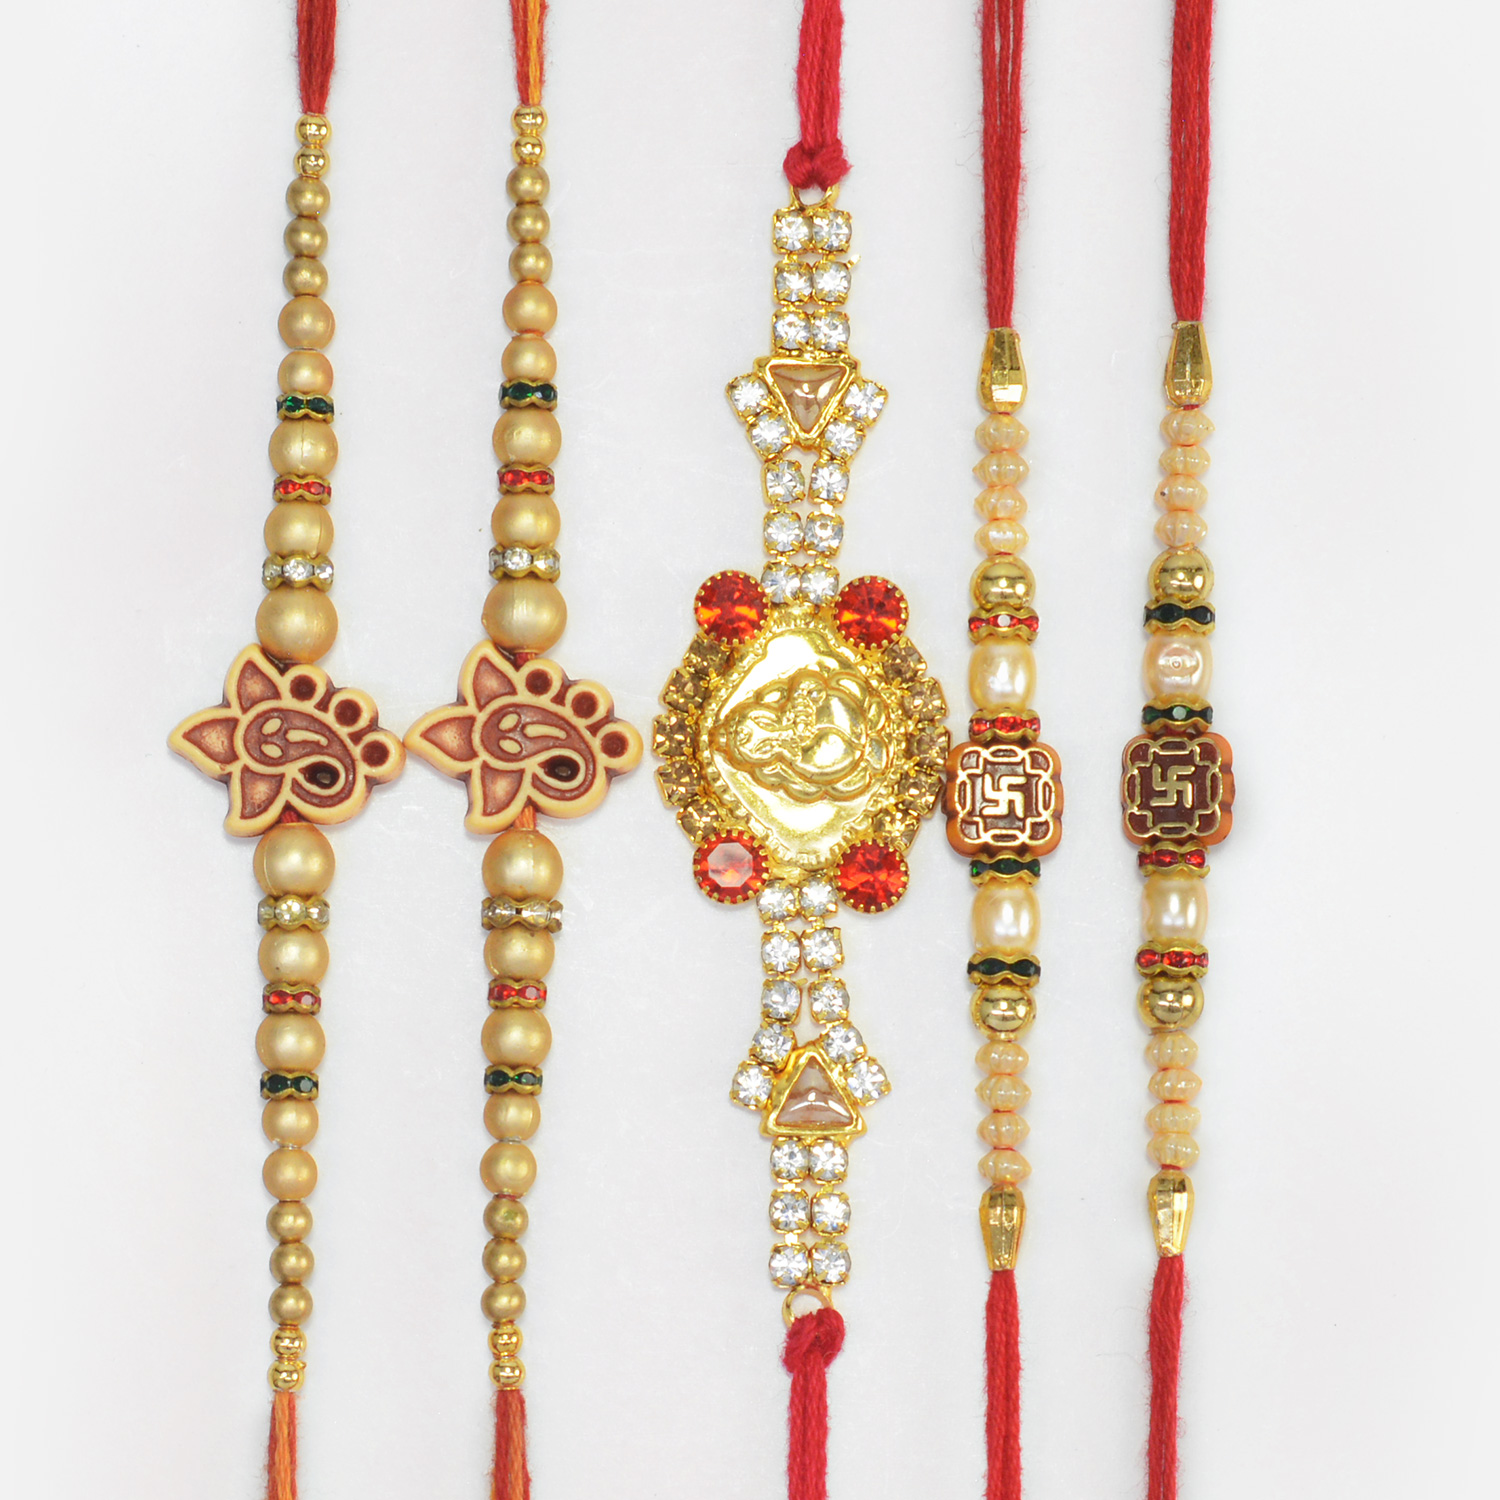 Shri Ganesha and Swastika Beads Pearls and Jewel Brother Rakhis Set of 5